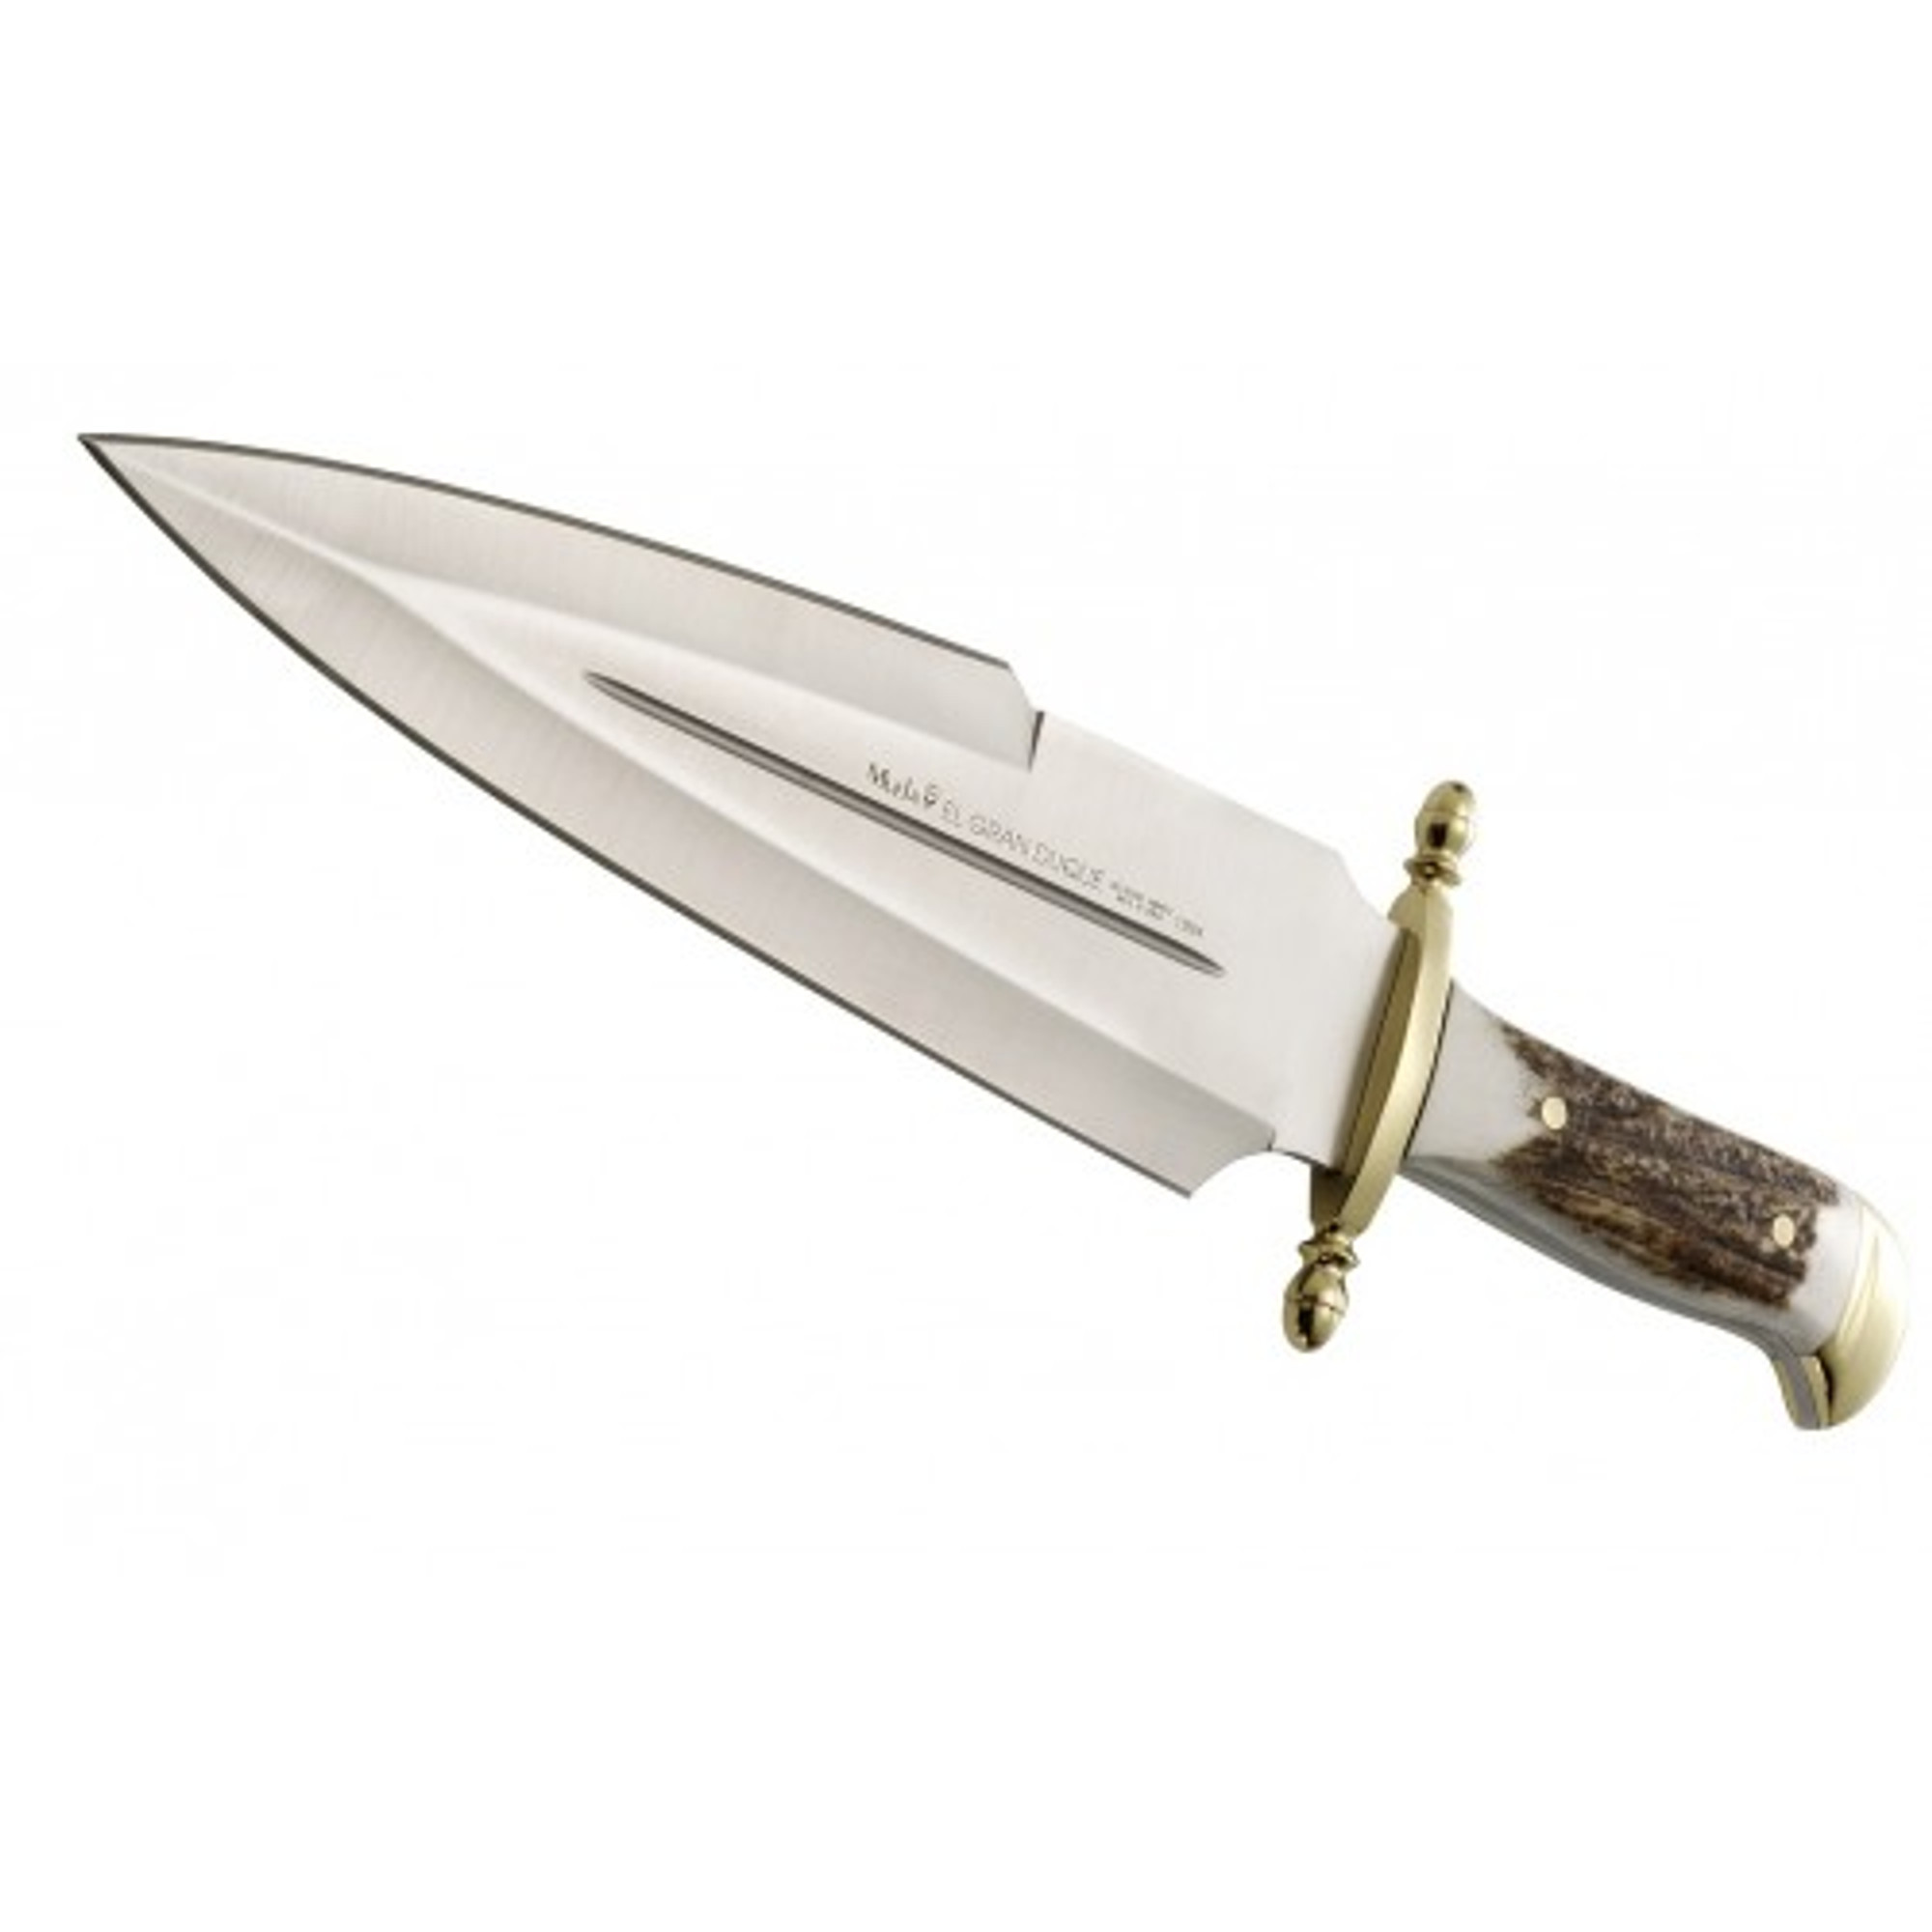 MUELA DUQUE-25E, X50CrMoV15, 10" Fixed Blade Hunting Knife, Deer Horn Handle